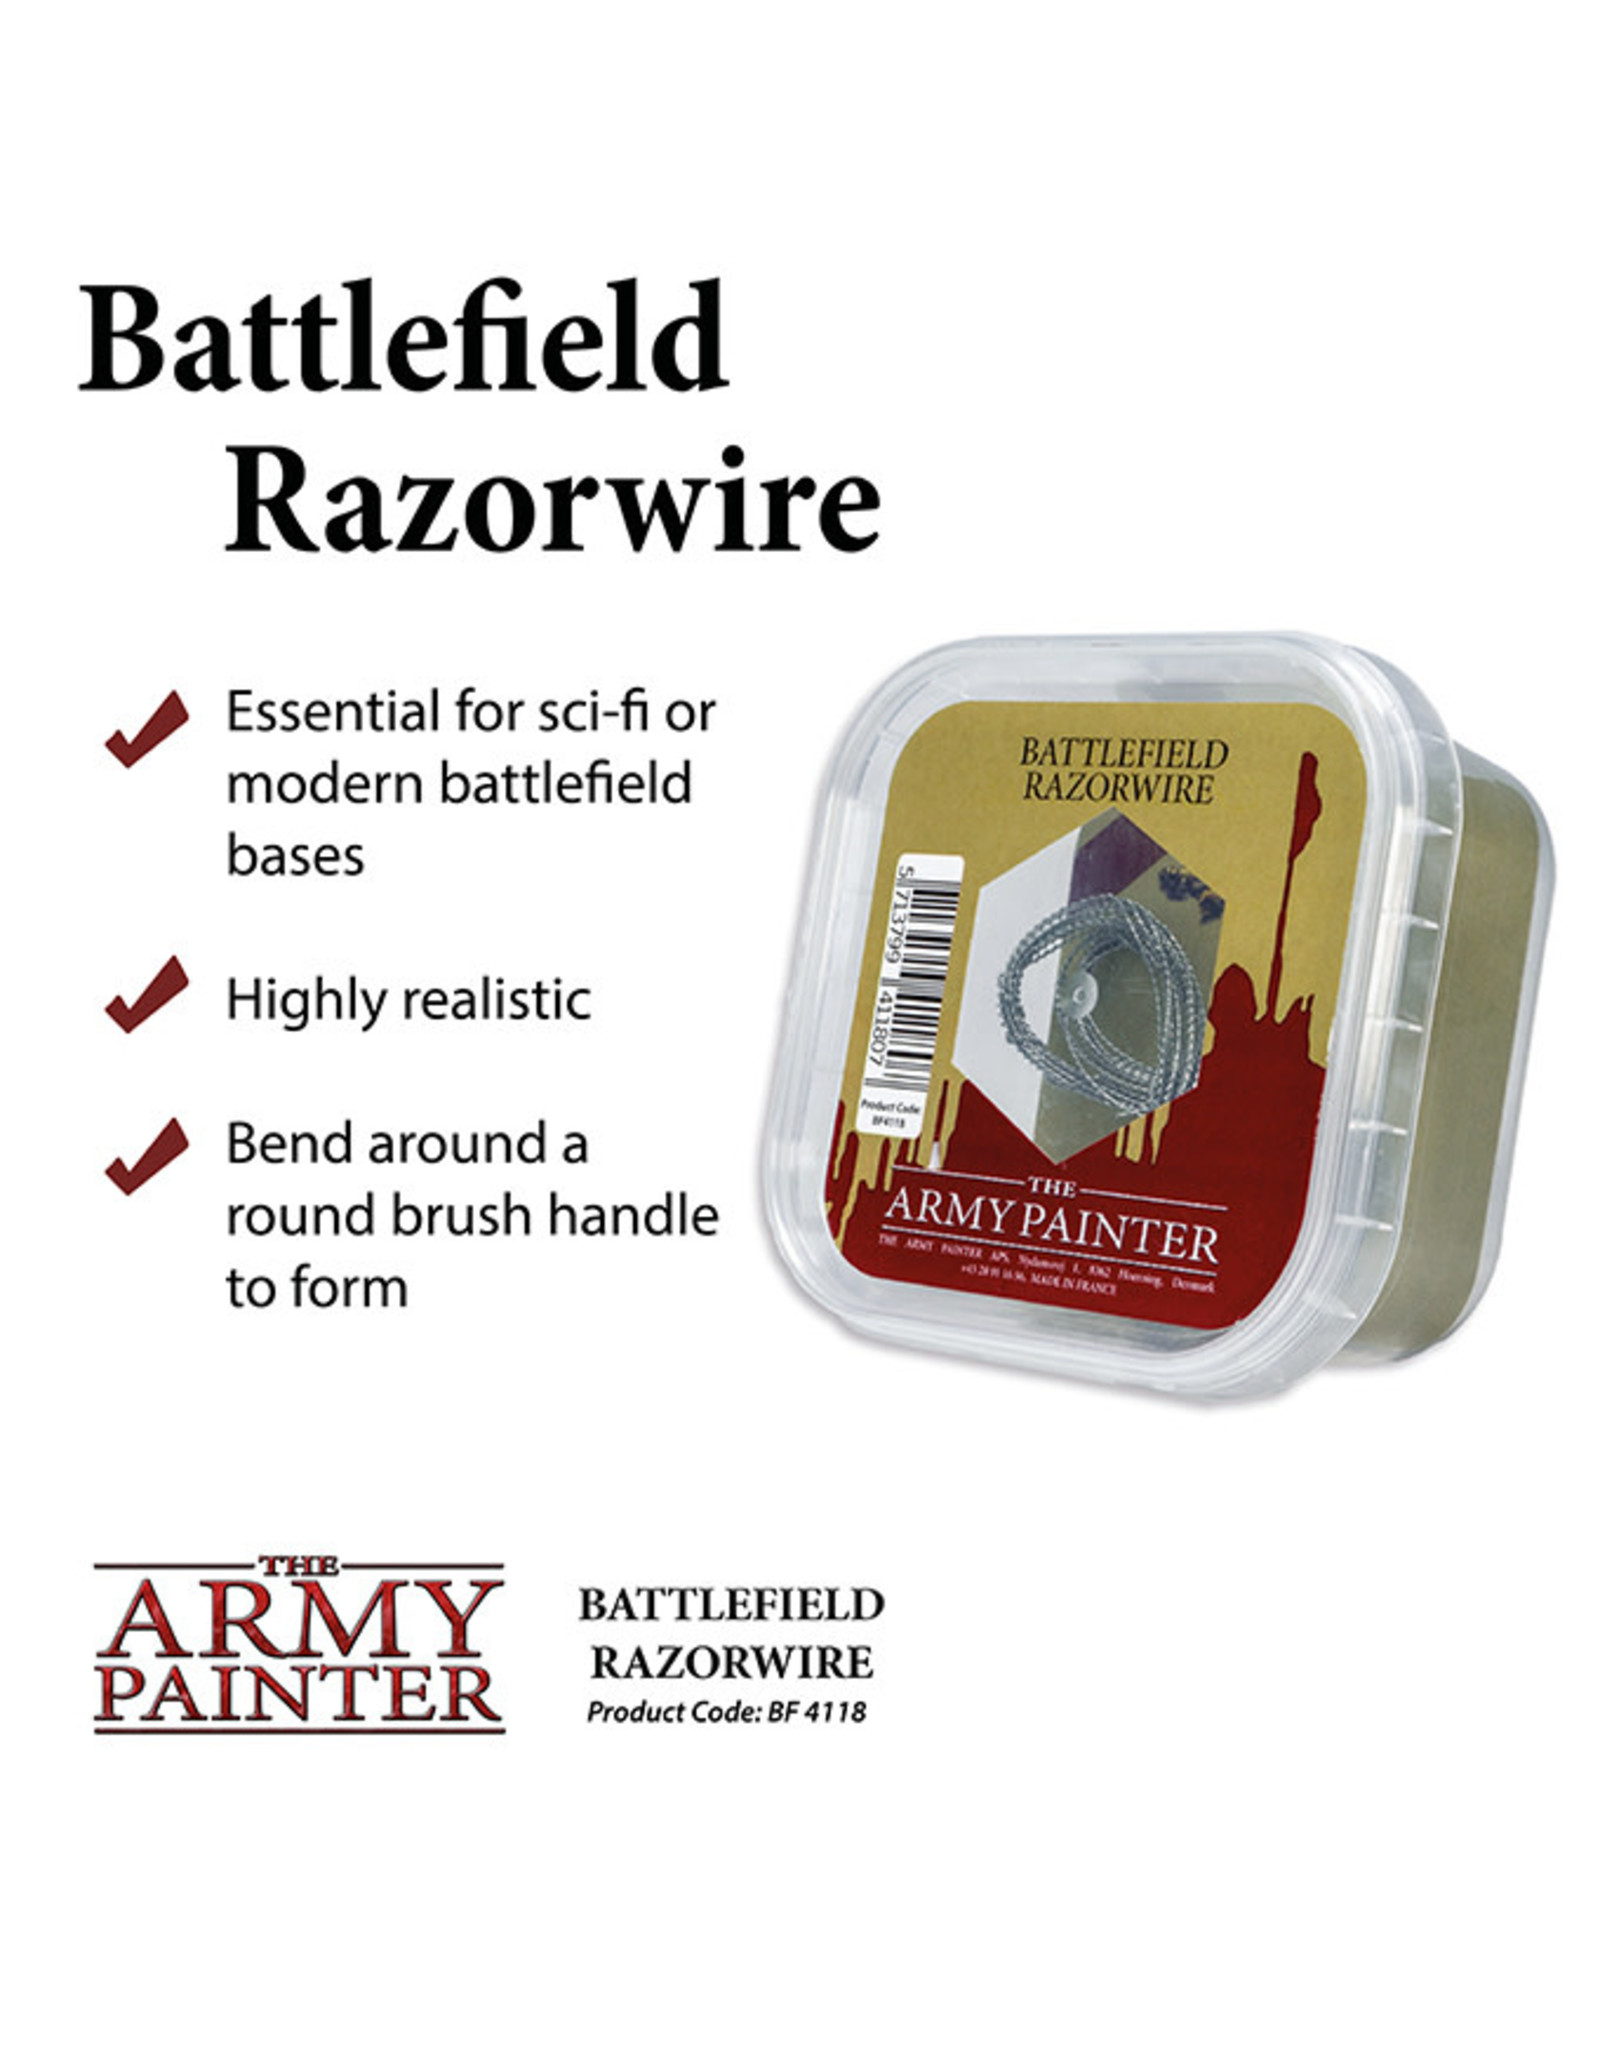 The Army Painter BF4118 Battlefield Razorwire